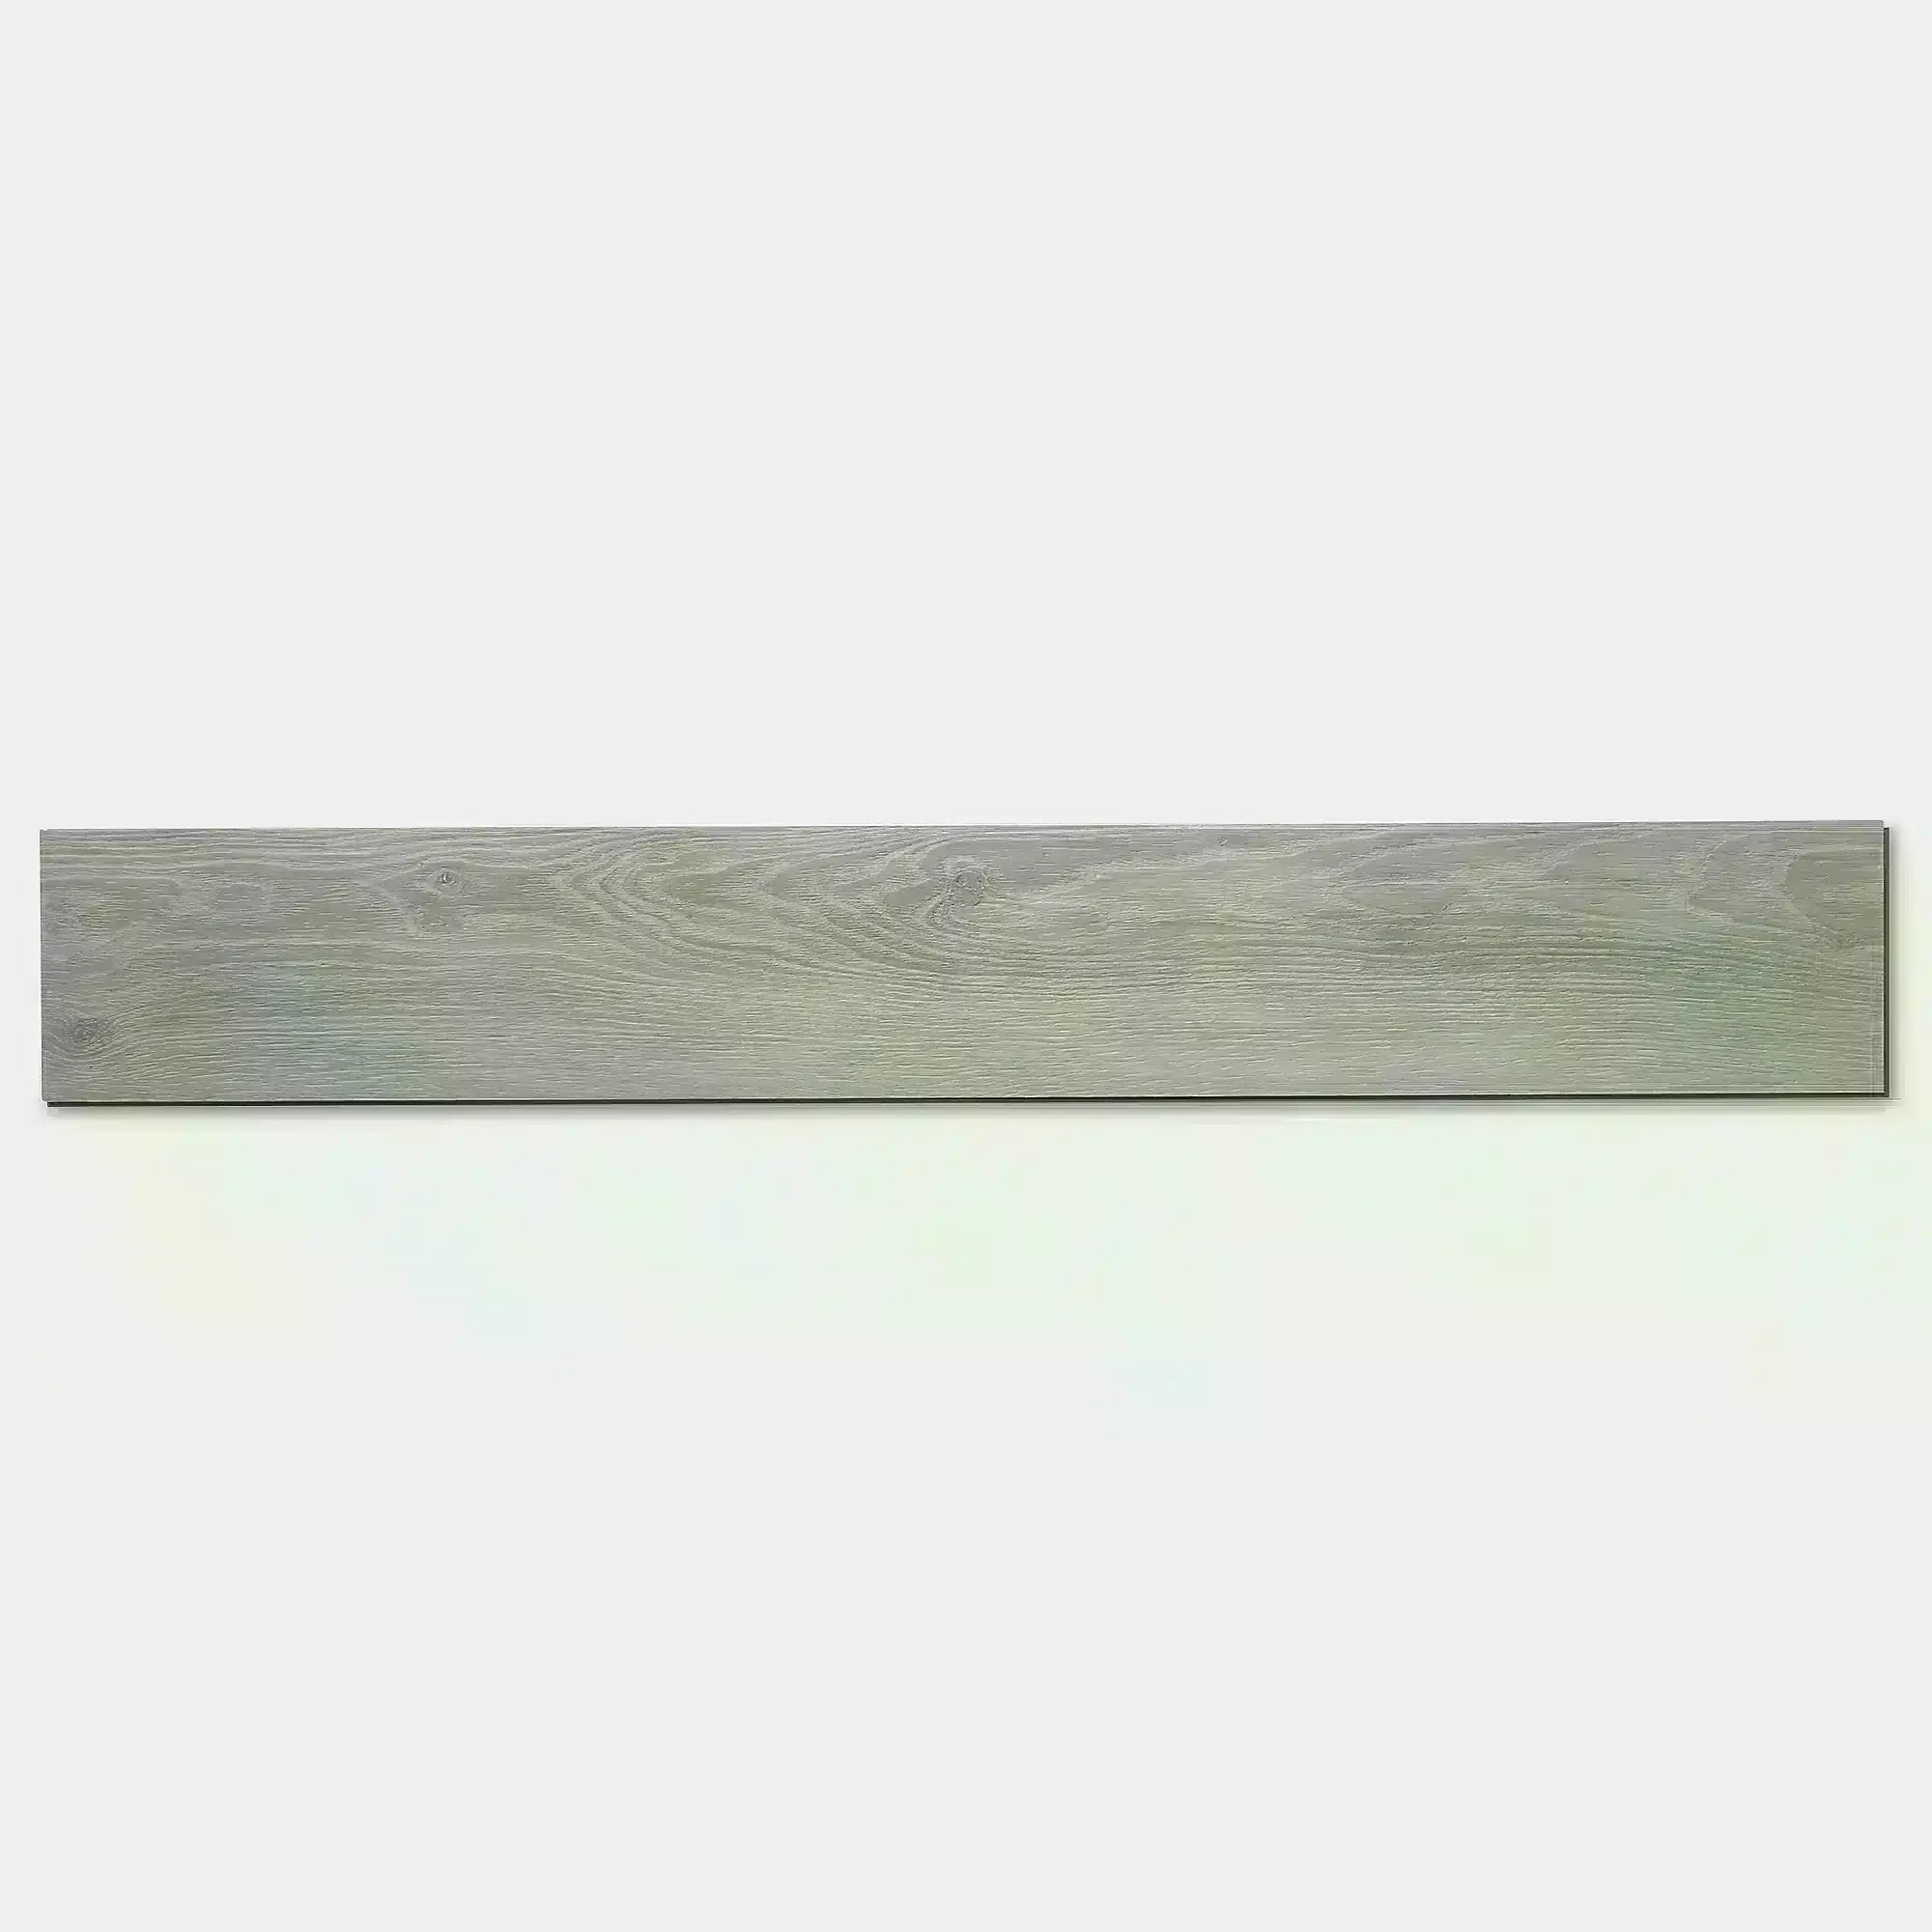 GoodHome Jazy Grey Wood effect Luxury vinyl click flooring, 2.2m² Pack 3822